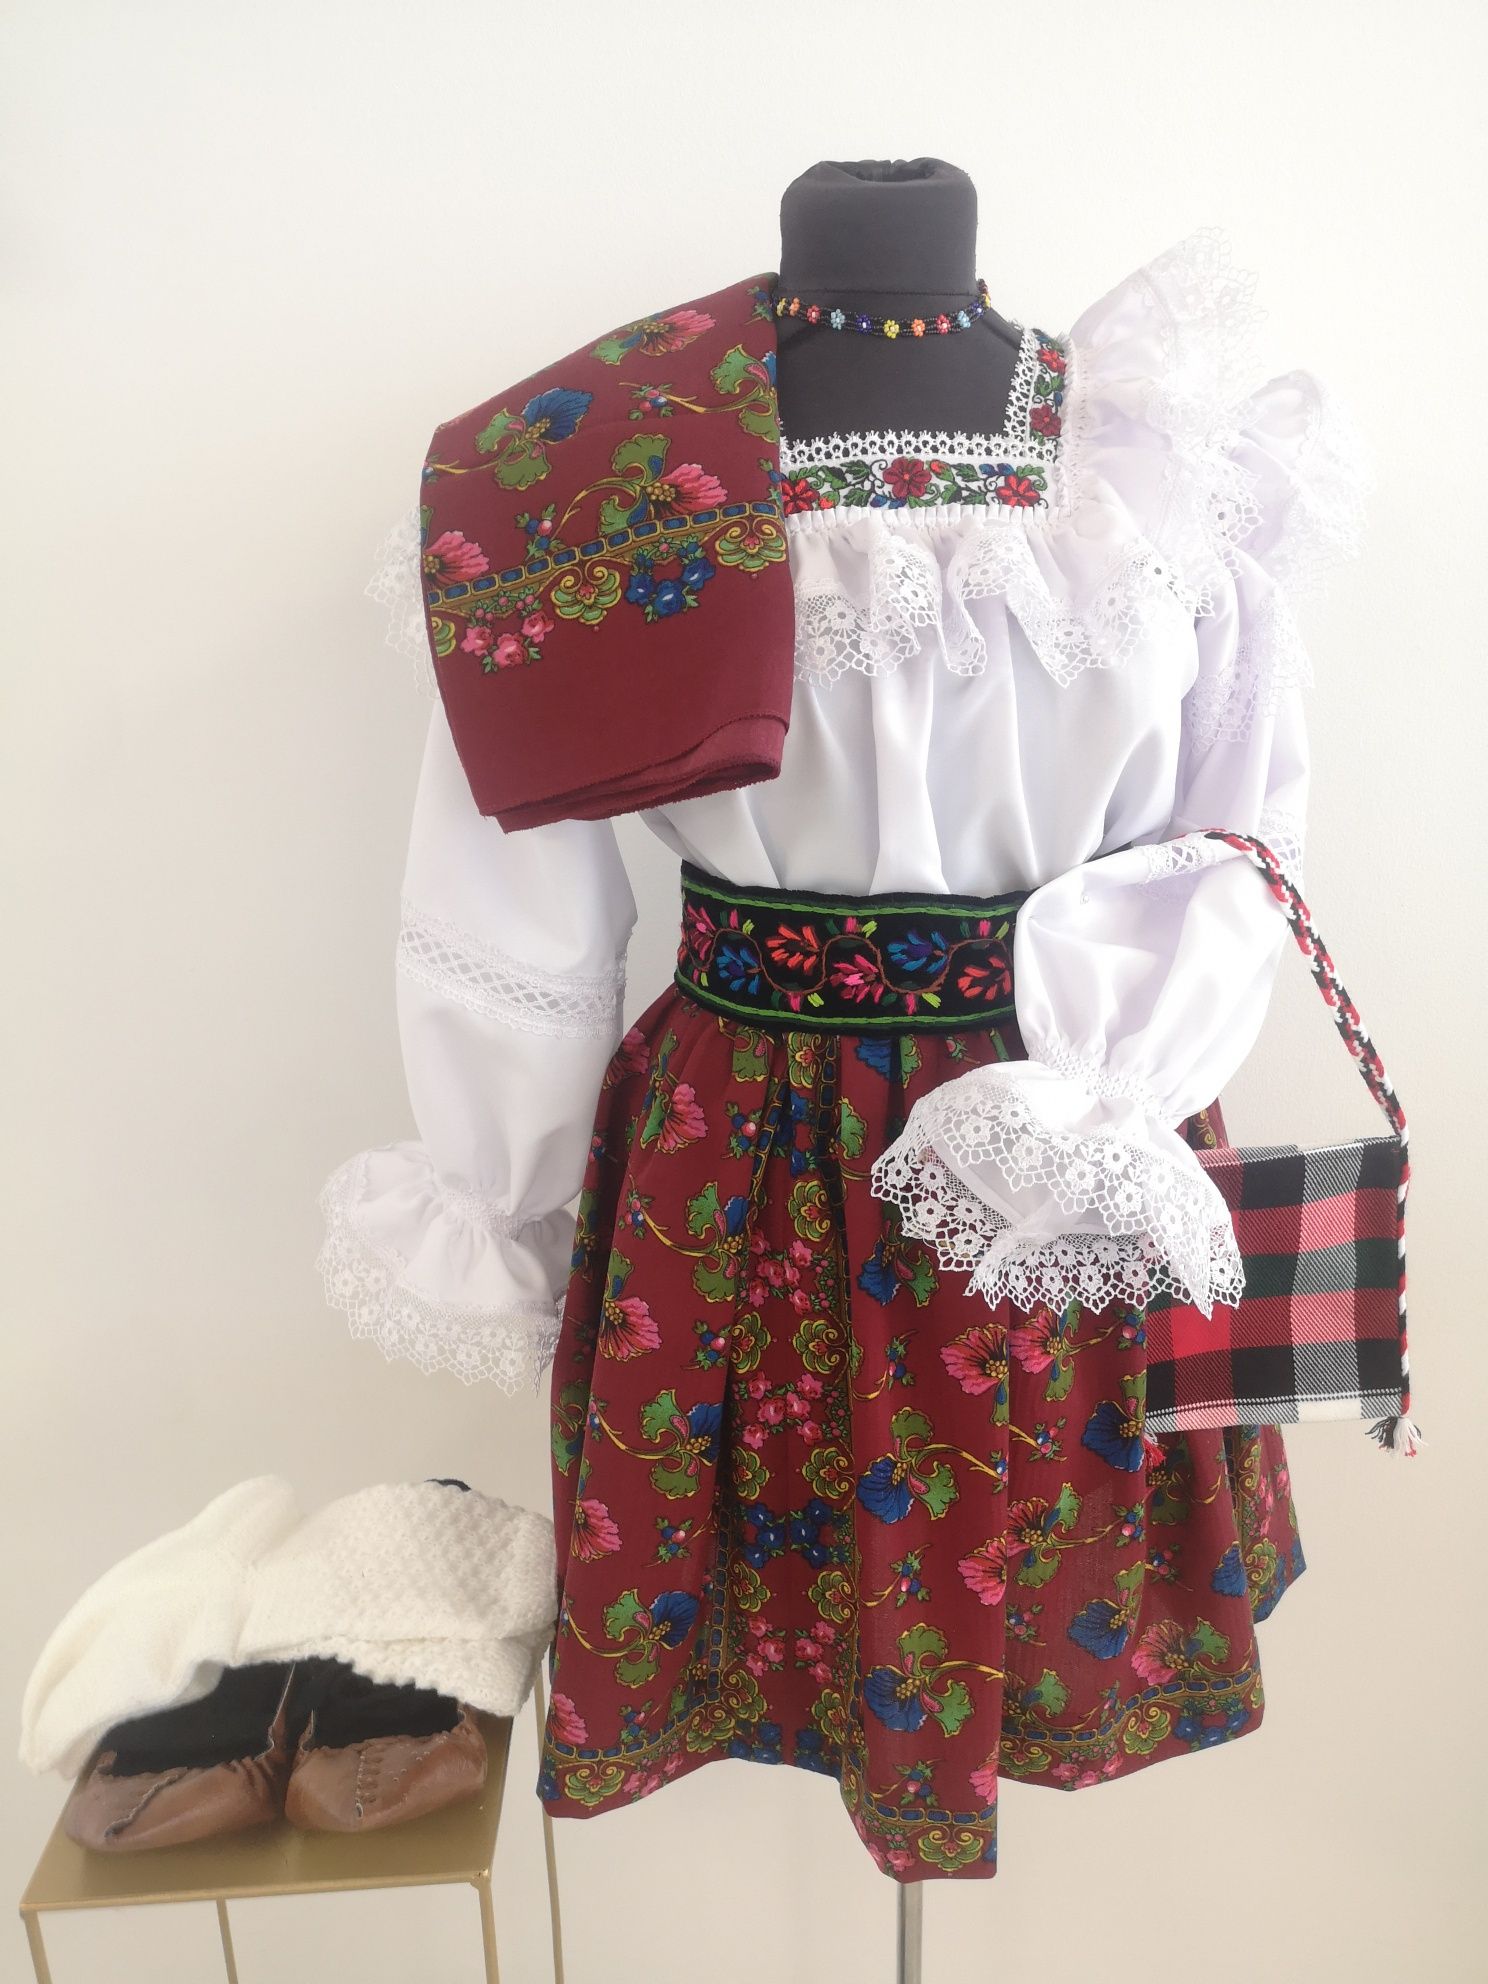 Costum popular complet pentru fete de Maramures